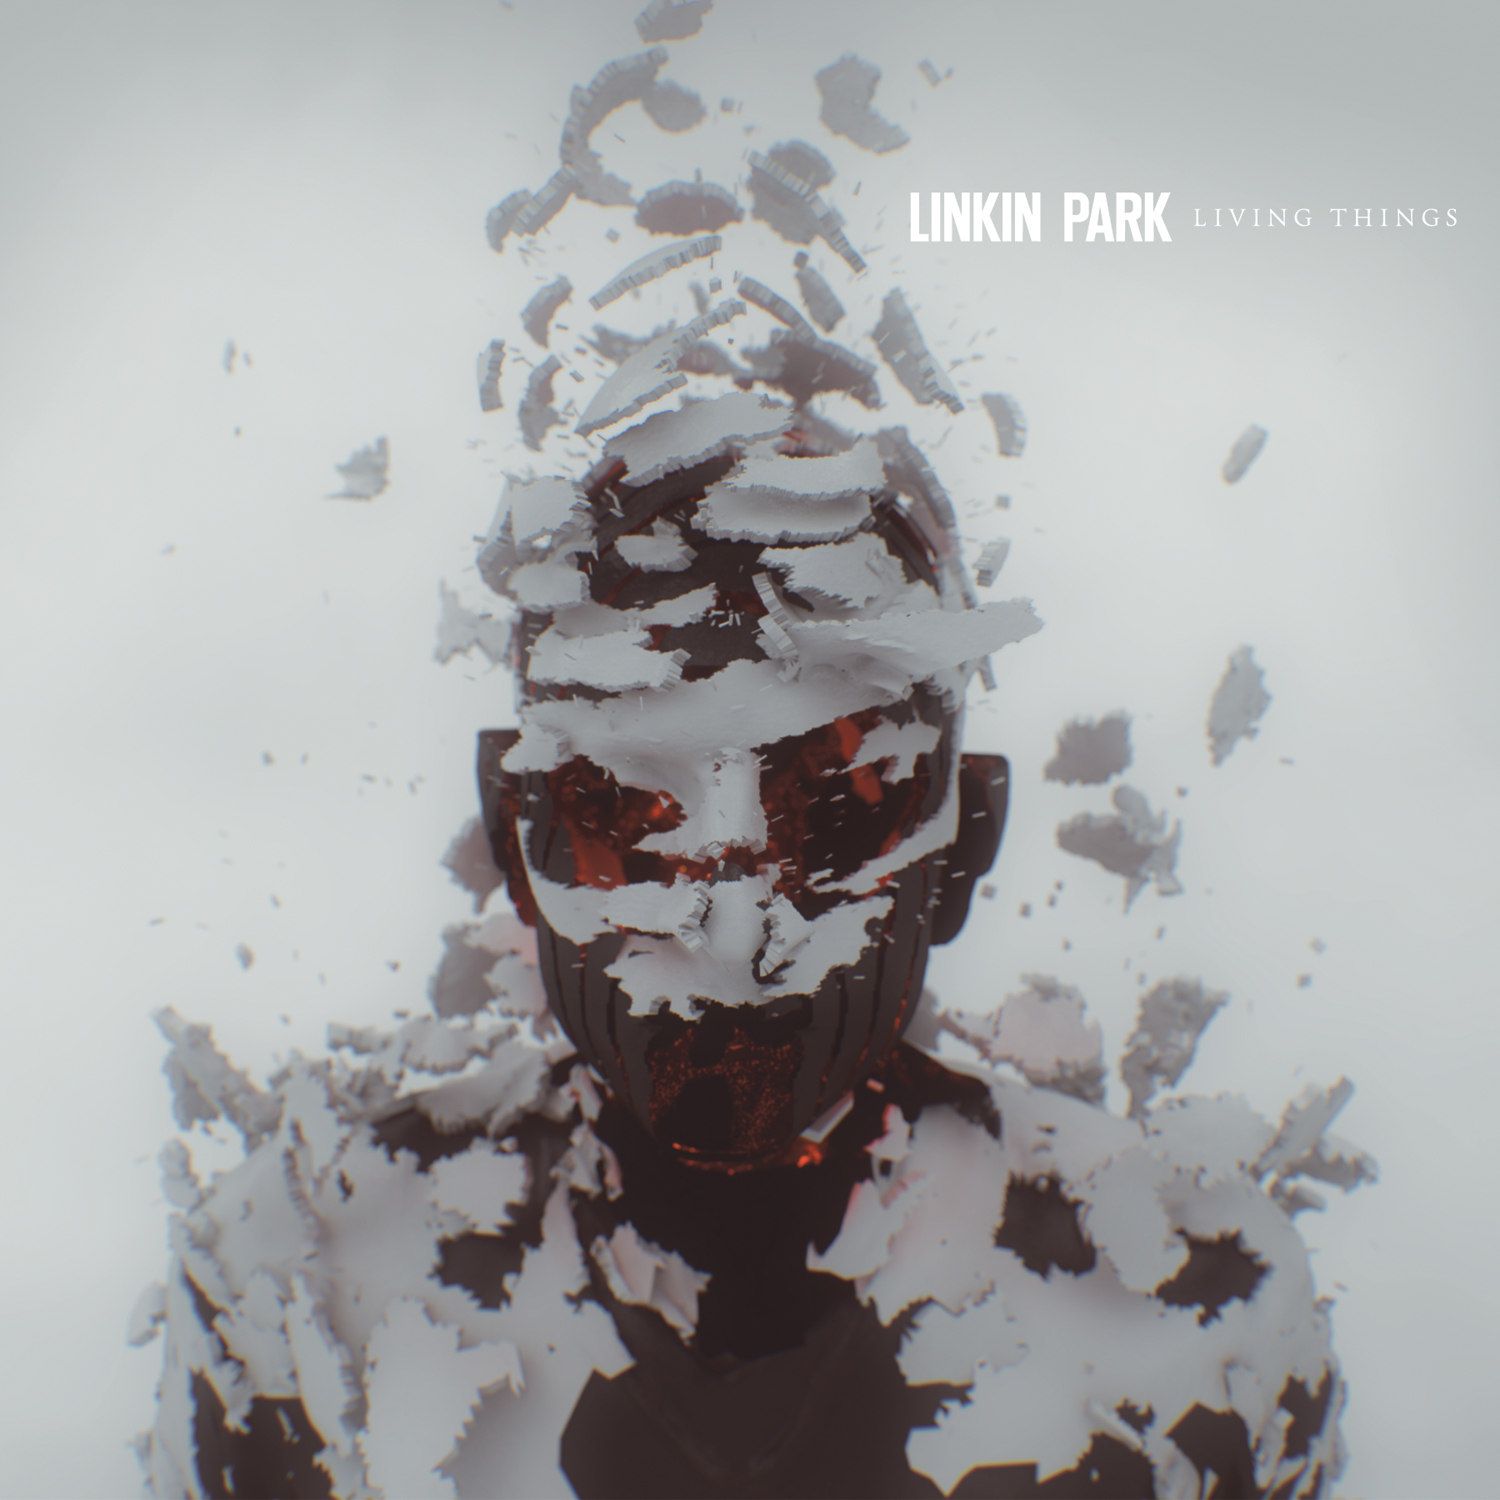 linkin park living things album cover 2012 3